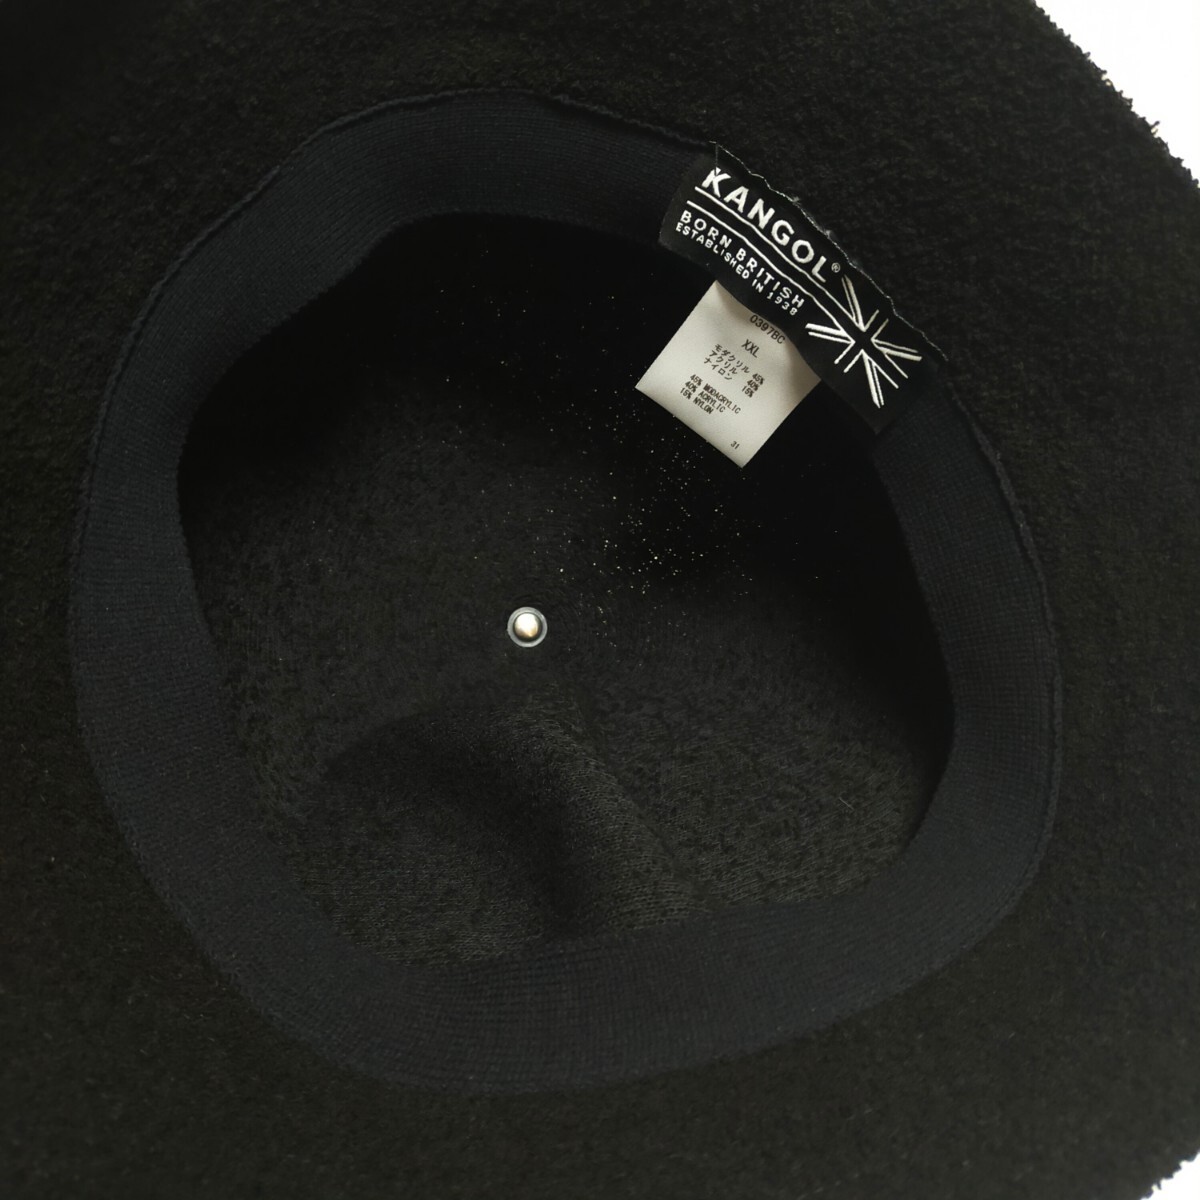 KANGOL Kangol 0397BC BERMUDA CASUAL BUCKET HATba Mu da casual панама шляпа редкий размер XXL( примерно 62~63cm) черный 